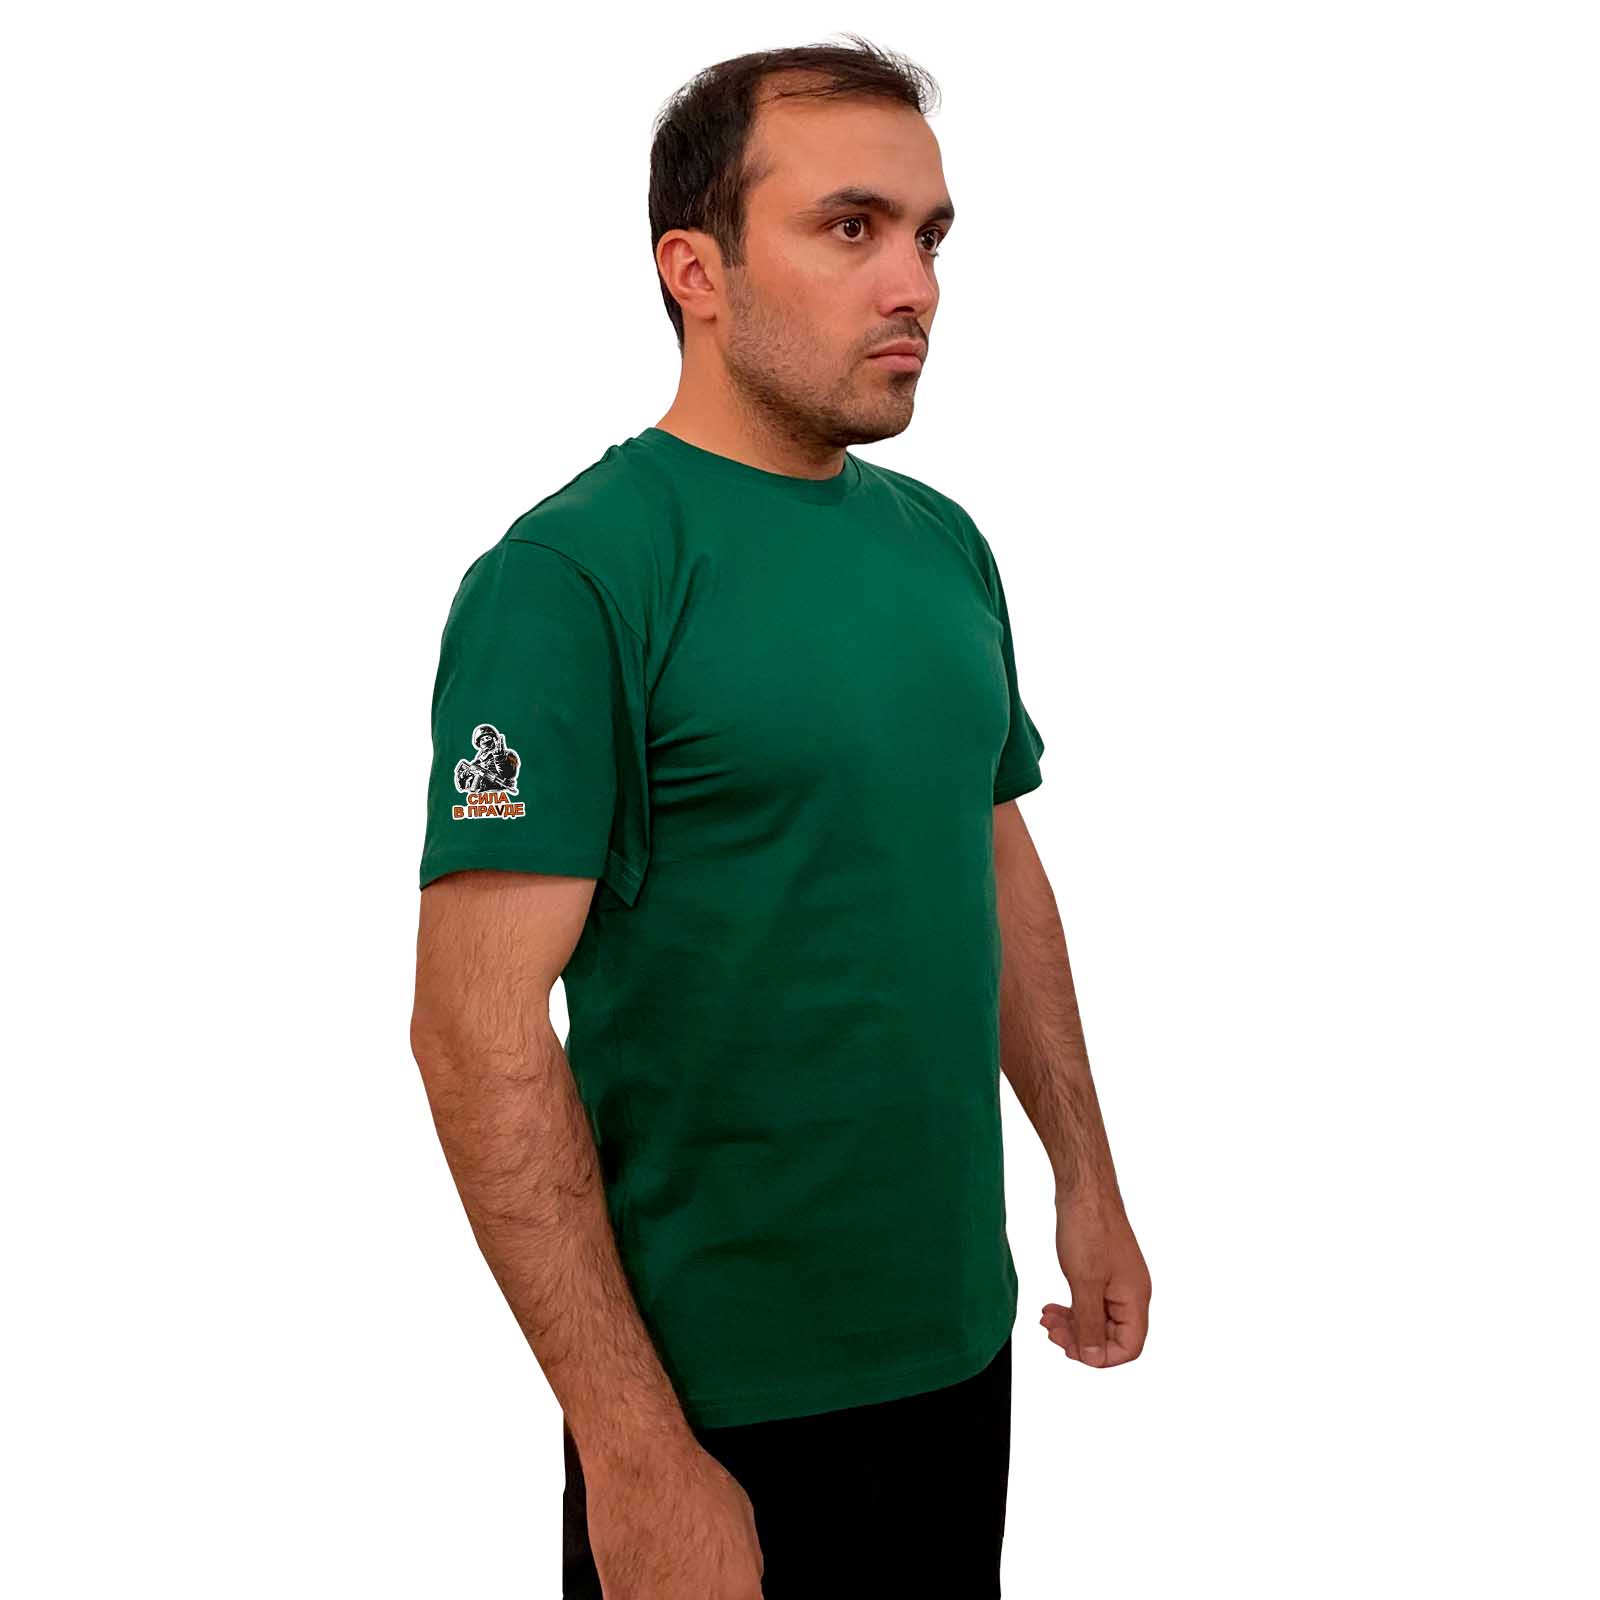 Зелёная футболка с термопринтом "Сила в праVде" на рукаве